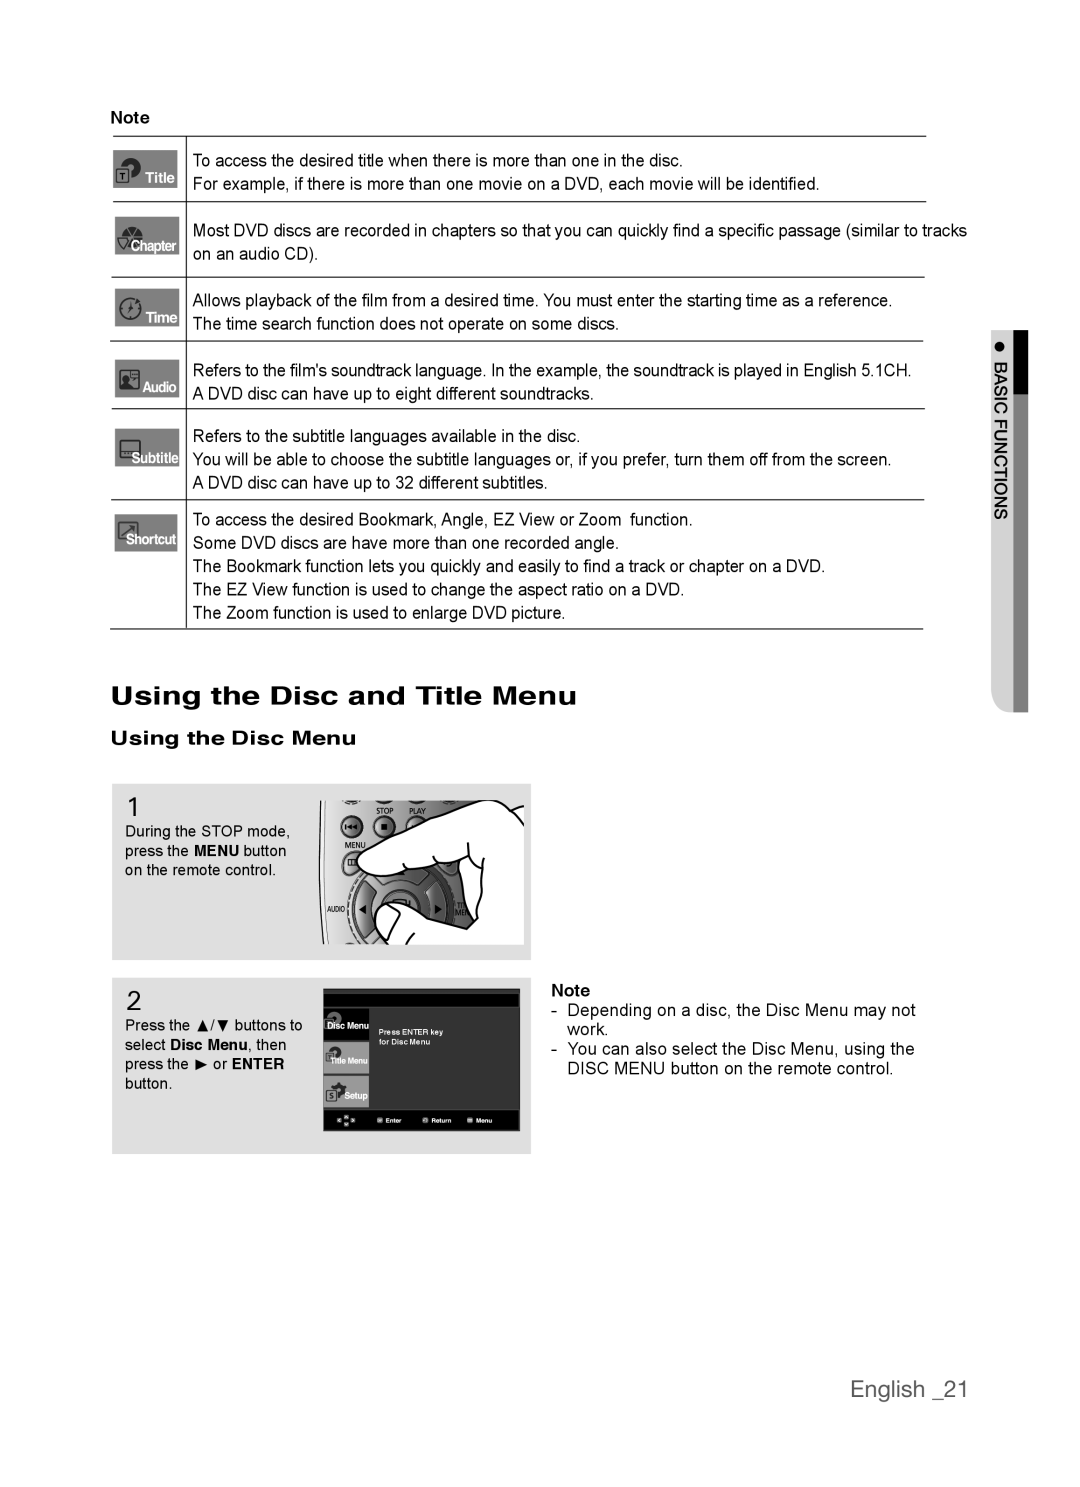 Samsung AK68-01770G, DVD-P390 user manual Using the Disc and Title Menu, Using the Disc Menu, English 